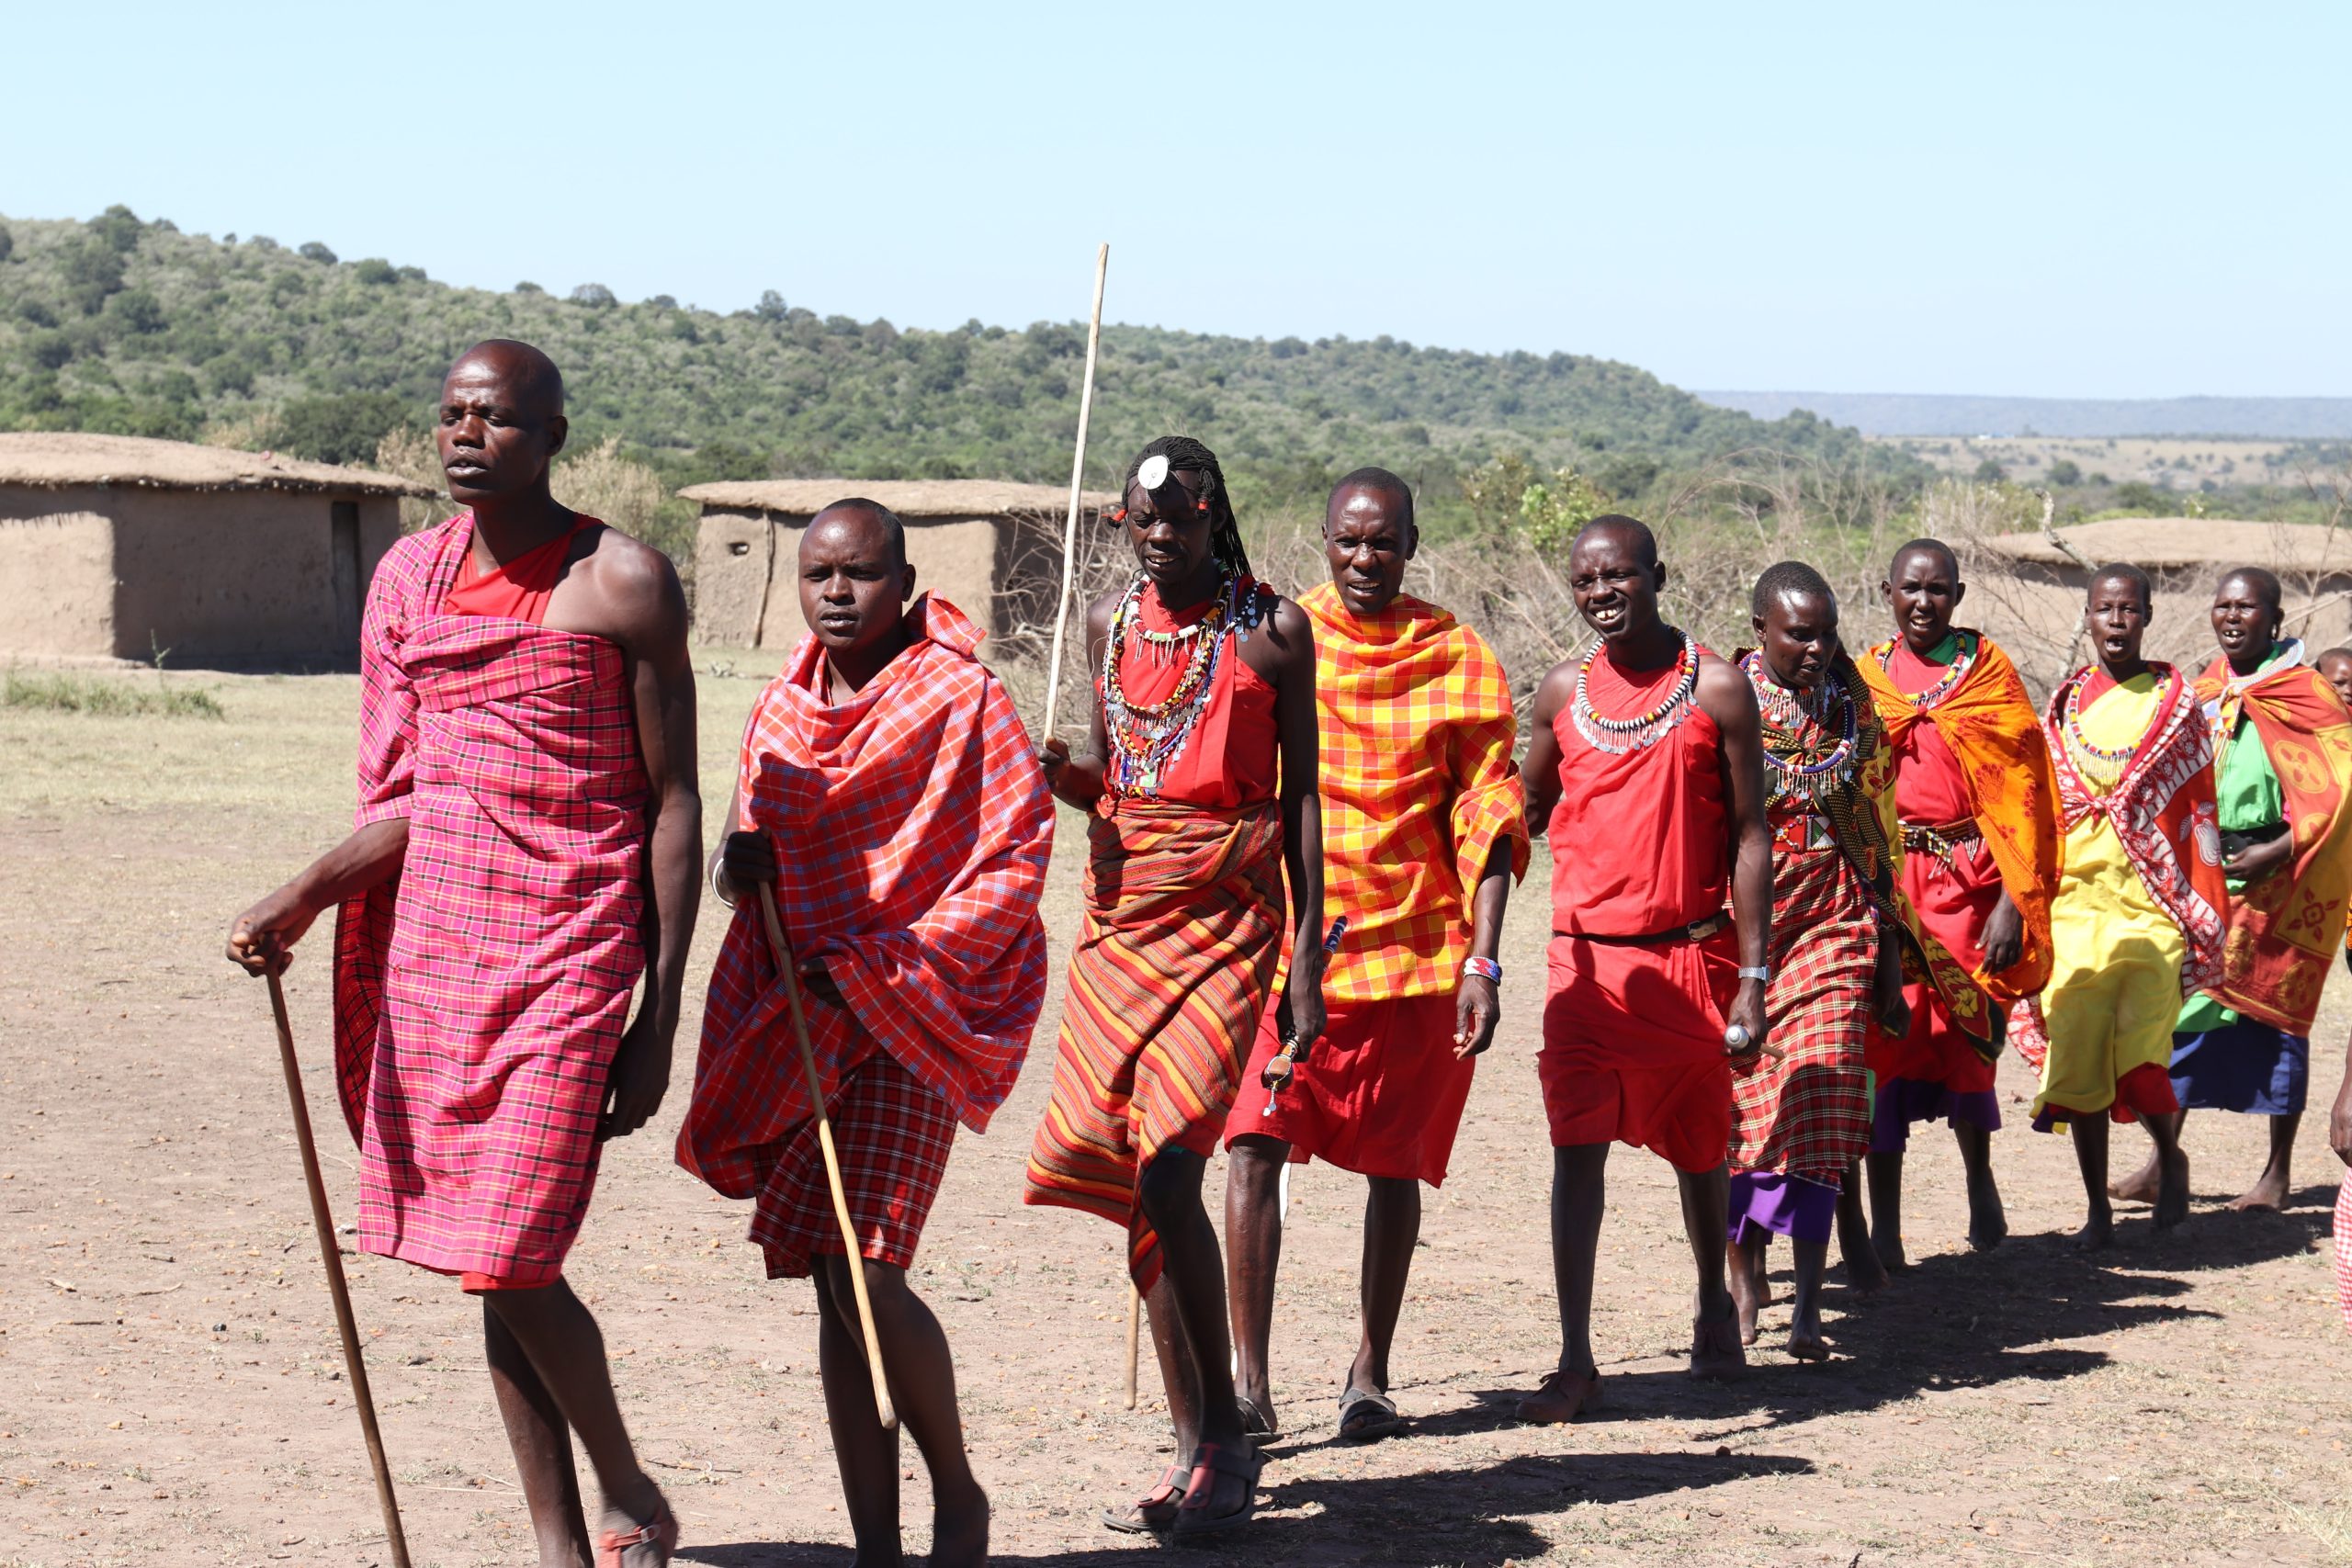 Tanzania Safari Adventure - Masai worries